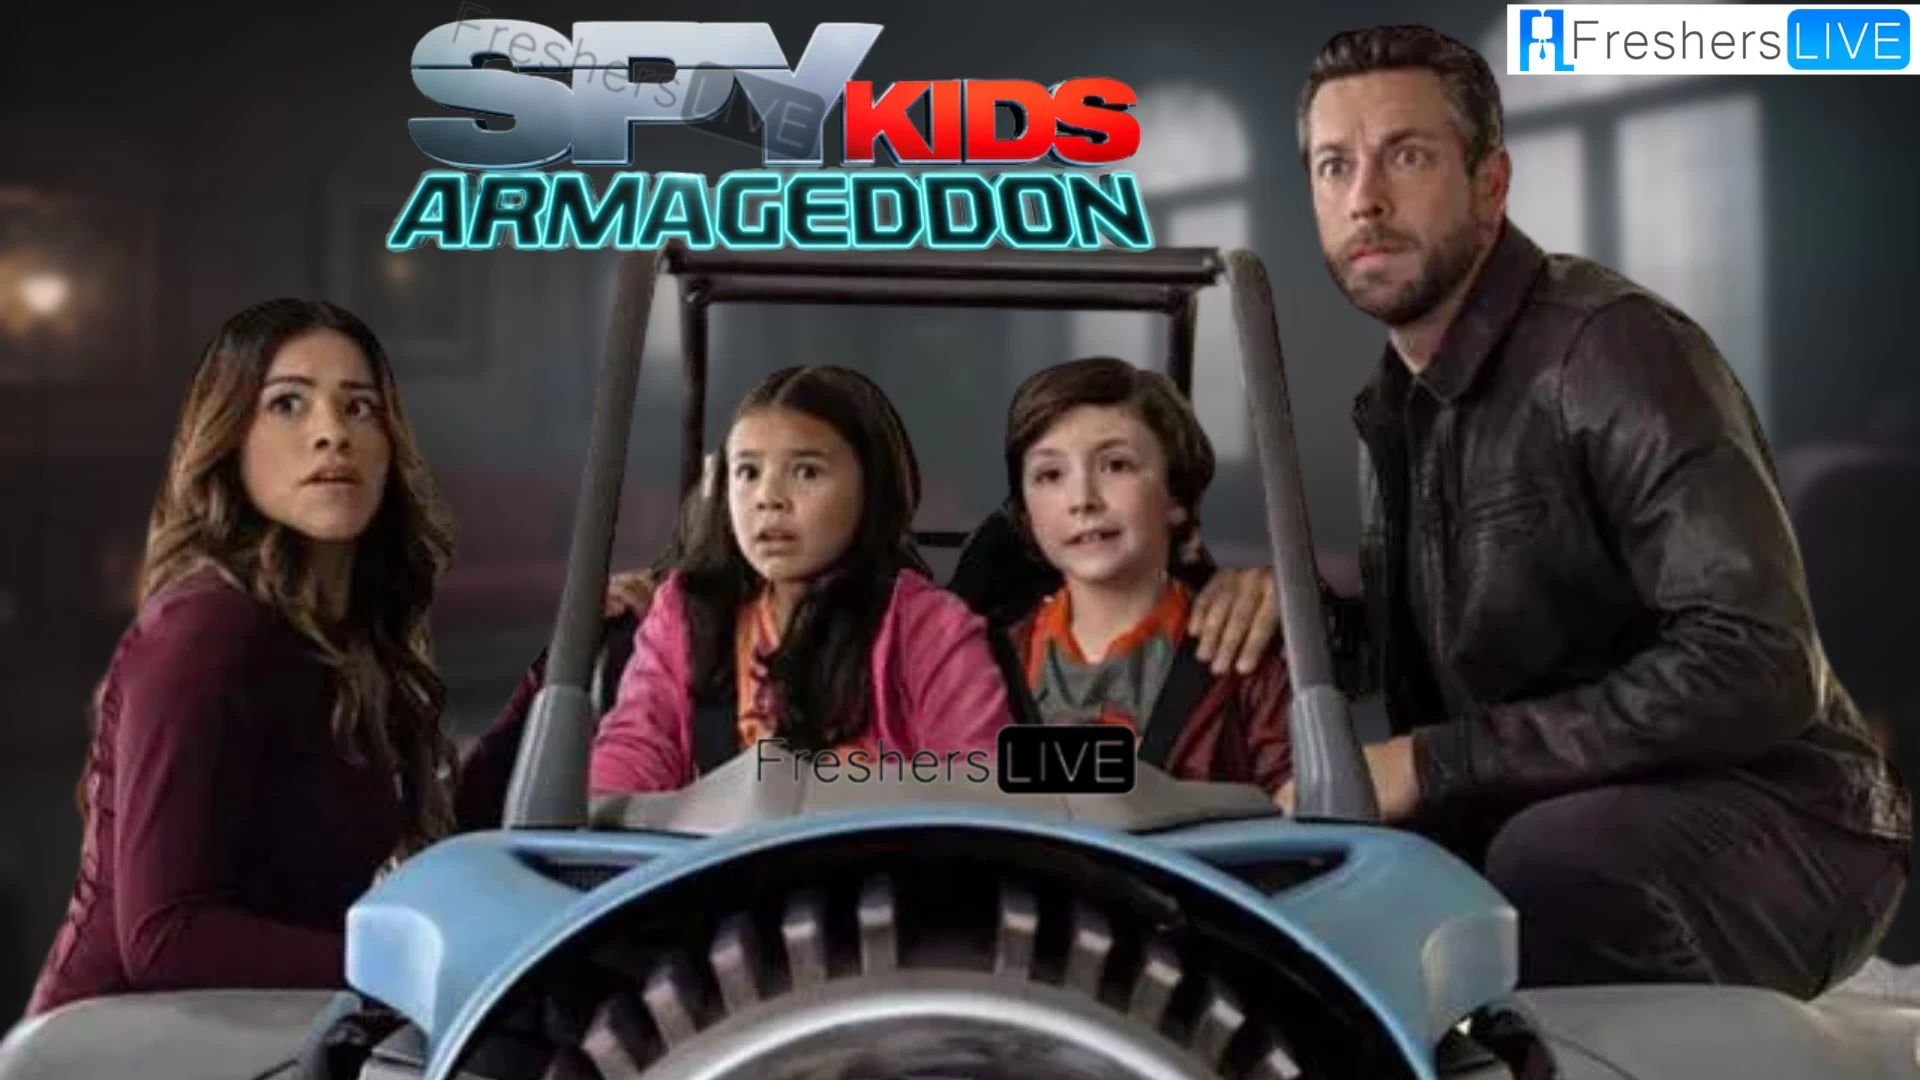 Spy Kids Armageddon Ending Explained, Cast, Plot, Review, and More